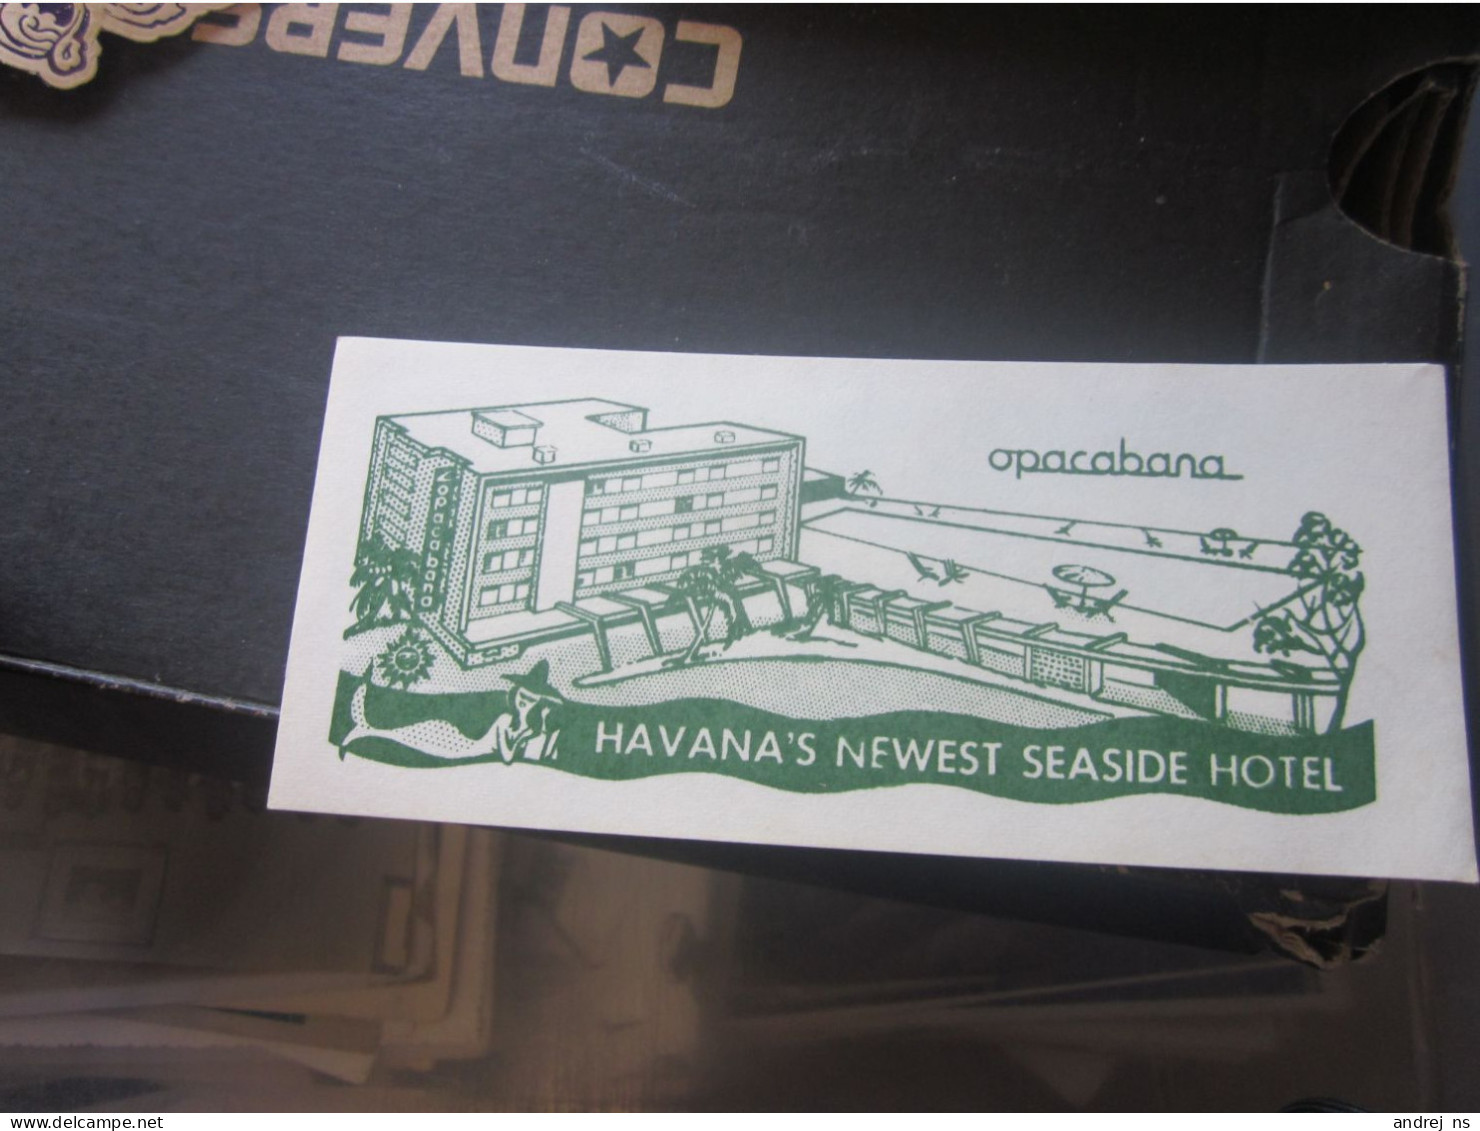 Opacabana Havana S Newst Seaside Hotel - Hotel Labels